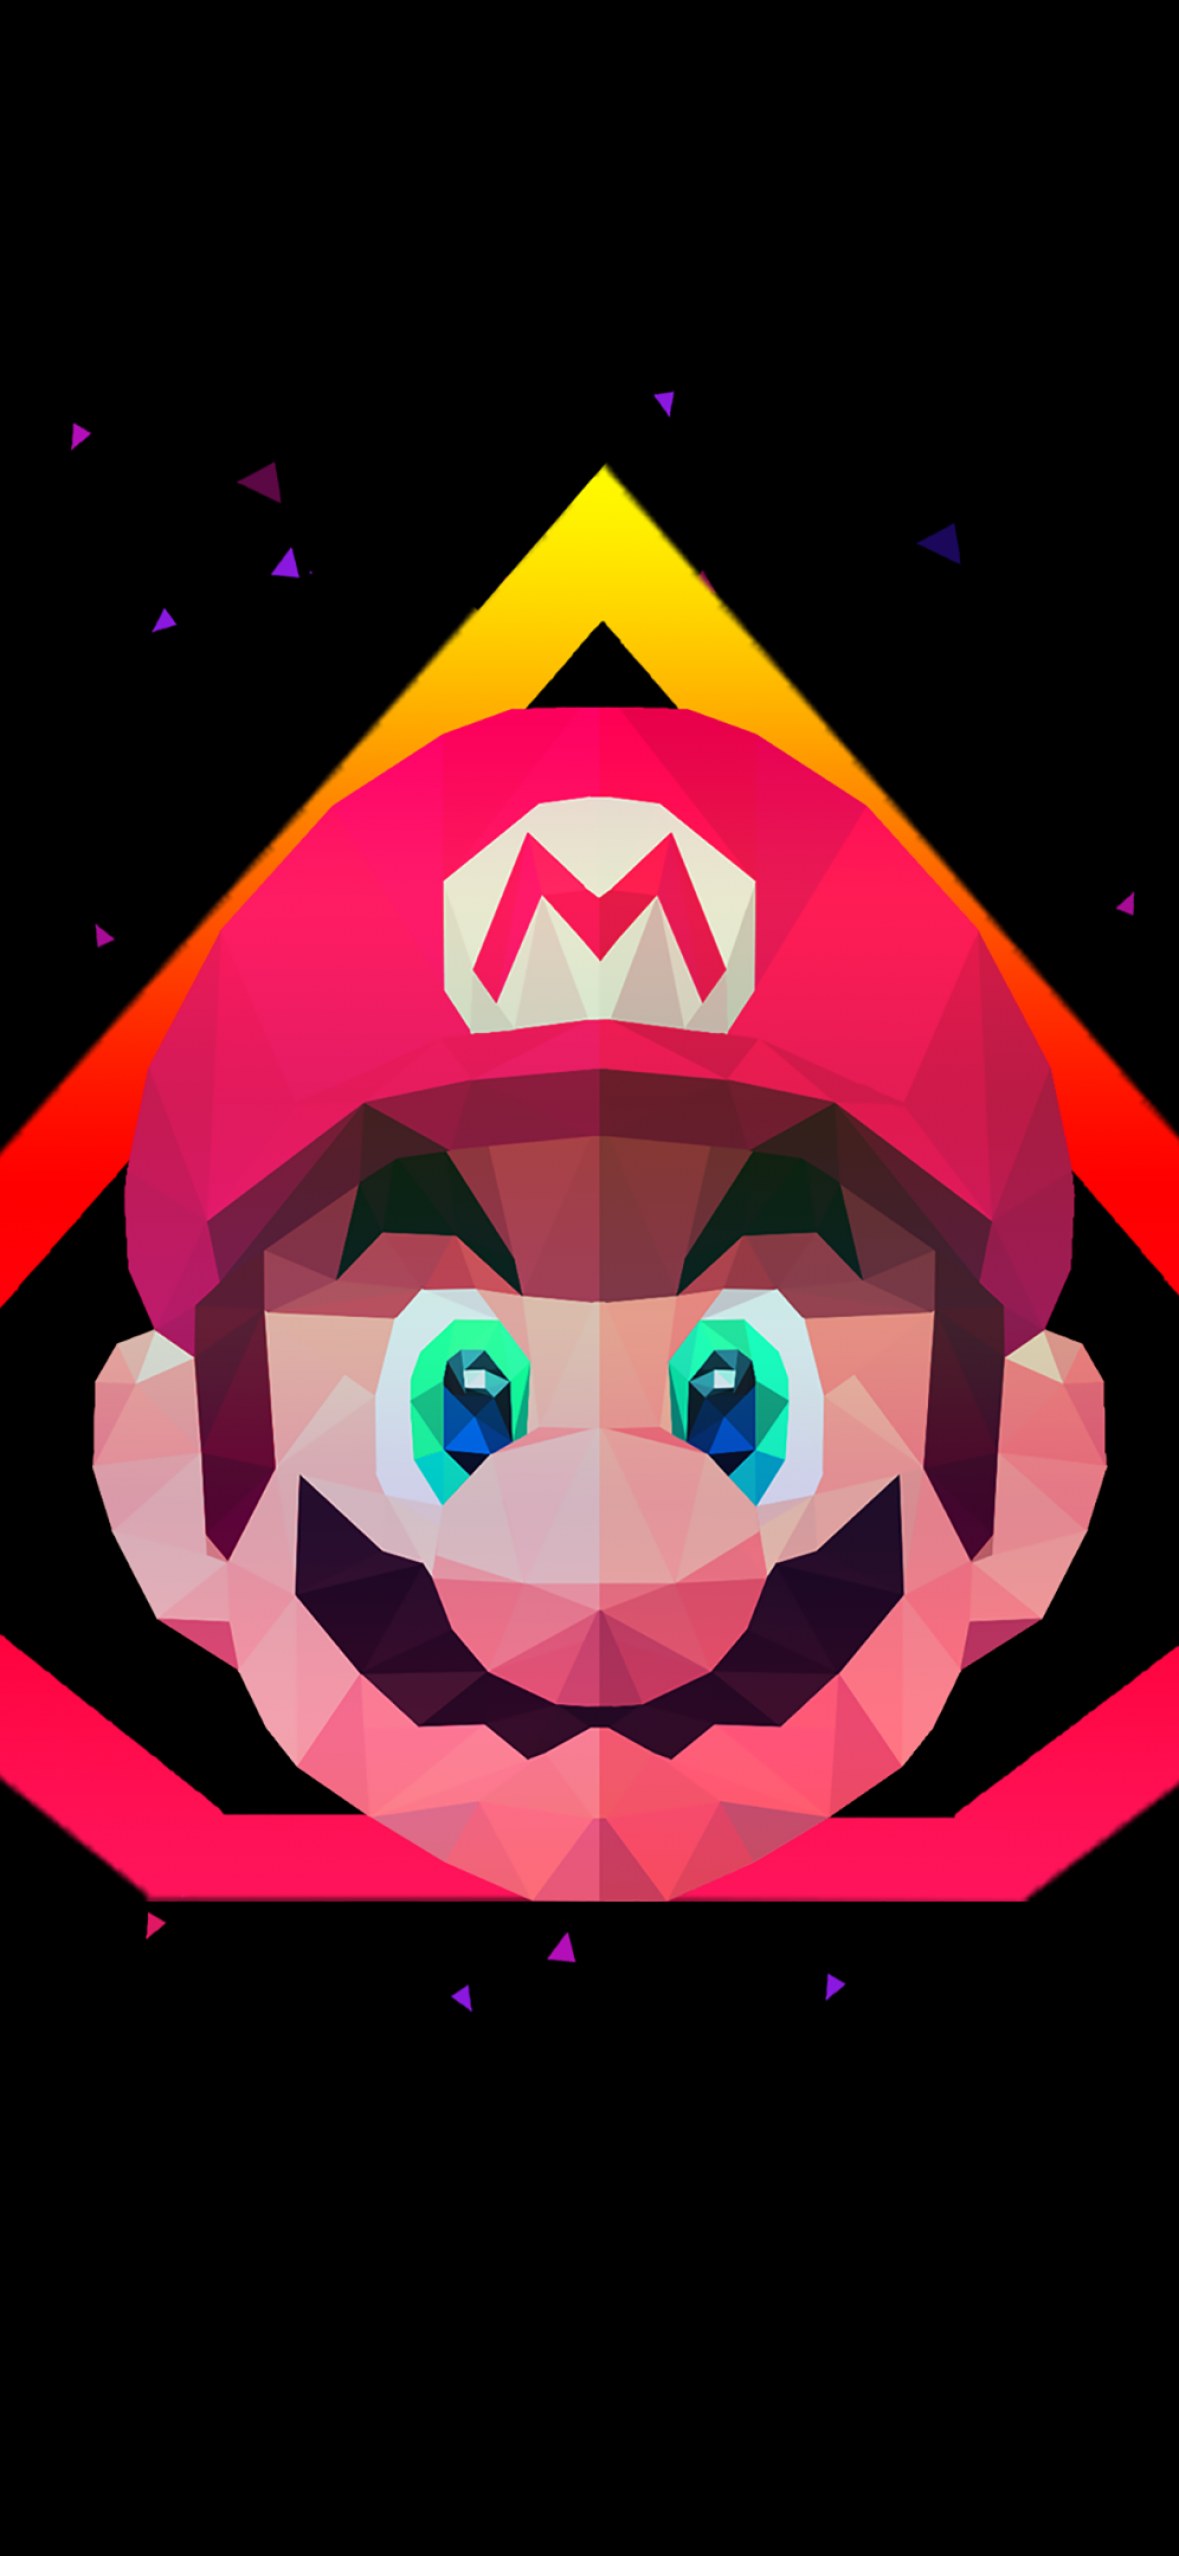 Super Mario Odyssey Wallpapers  Top Free Super Mario Odyssey Backgrounds   WallpaperAccess